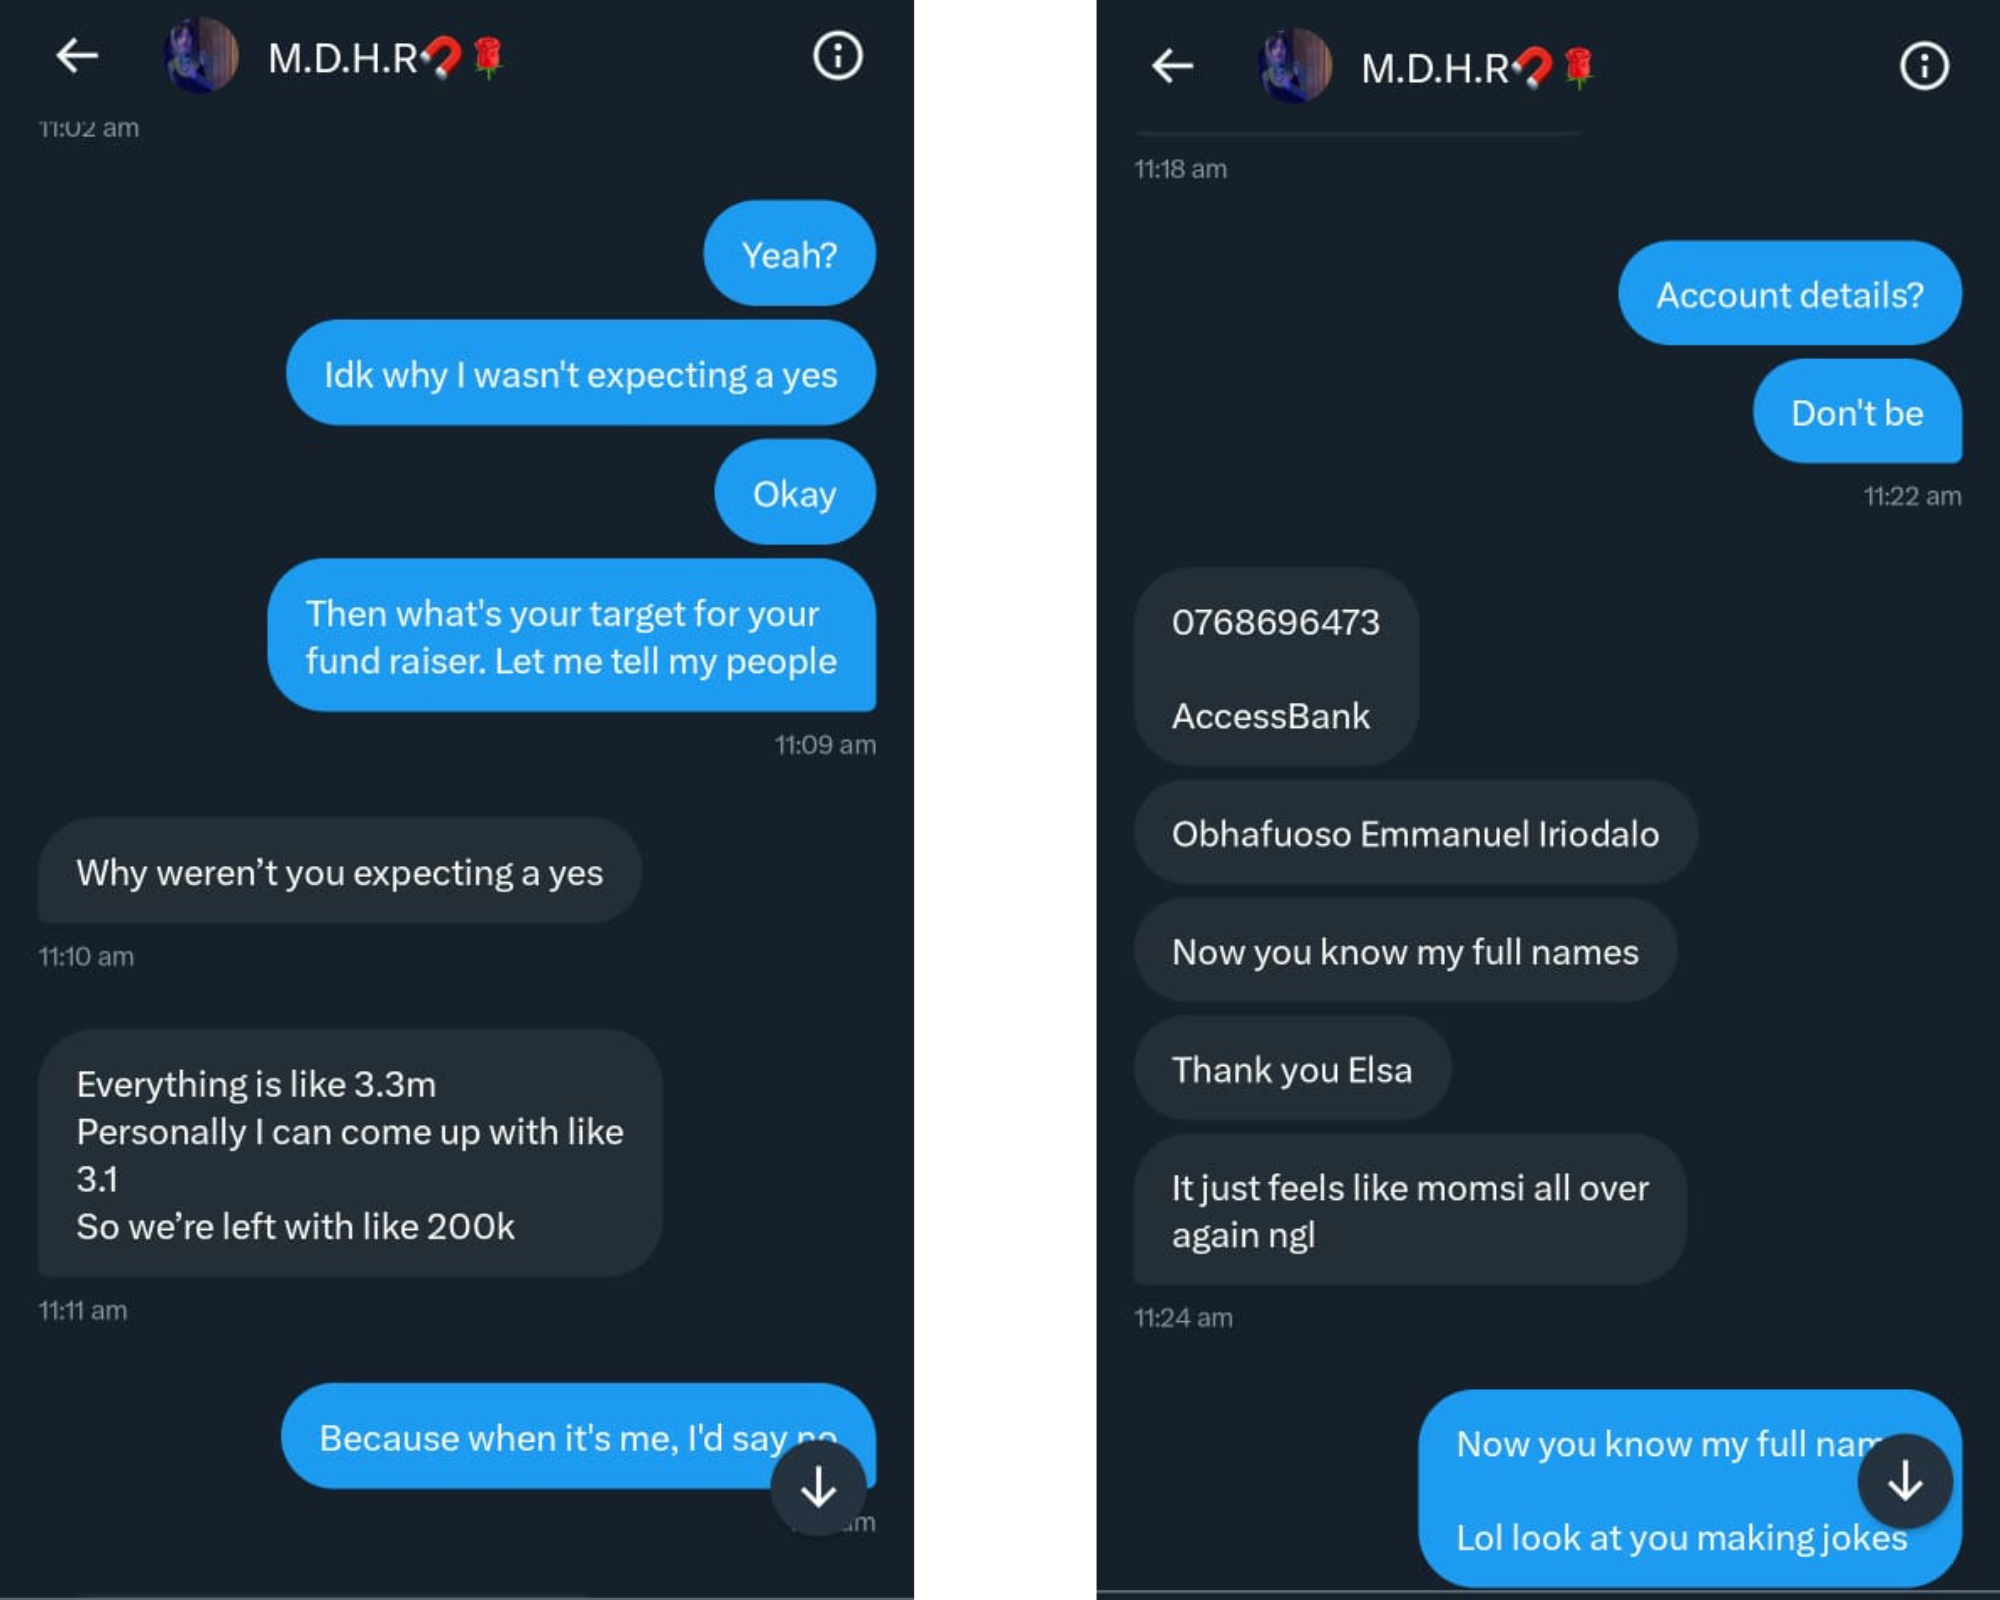 Some screenshots of Odalo’s message to Elsa